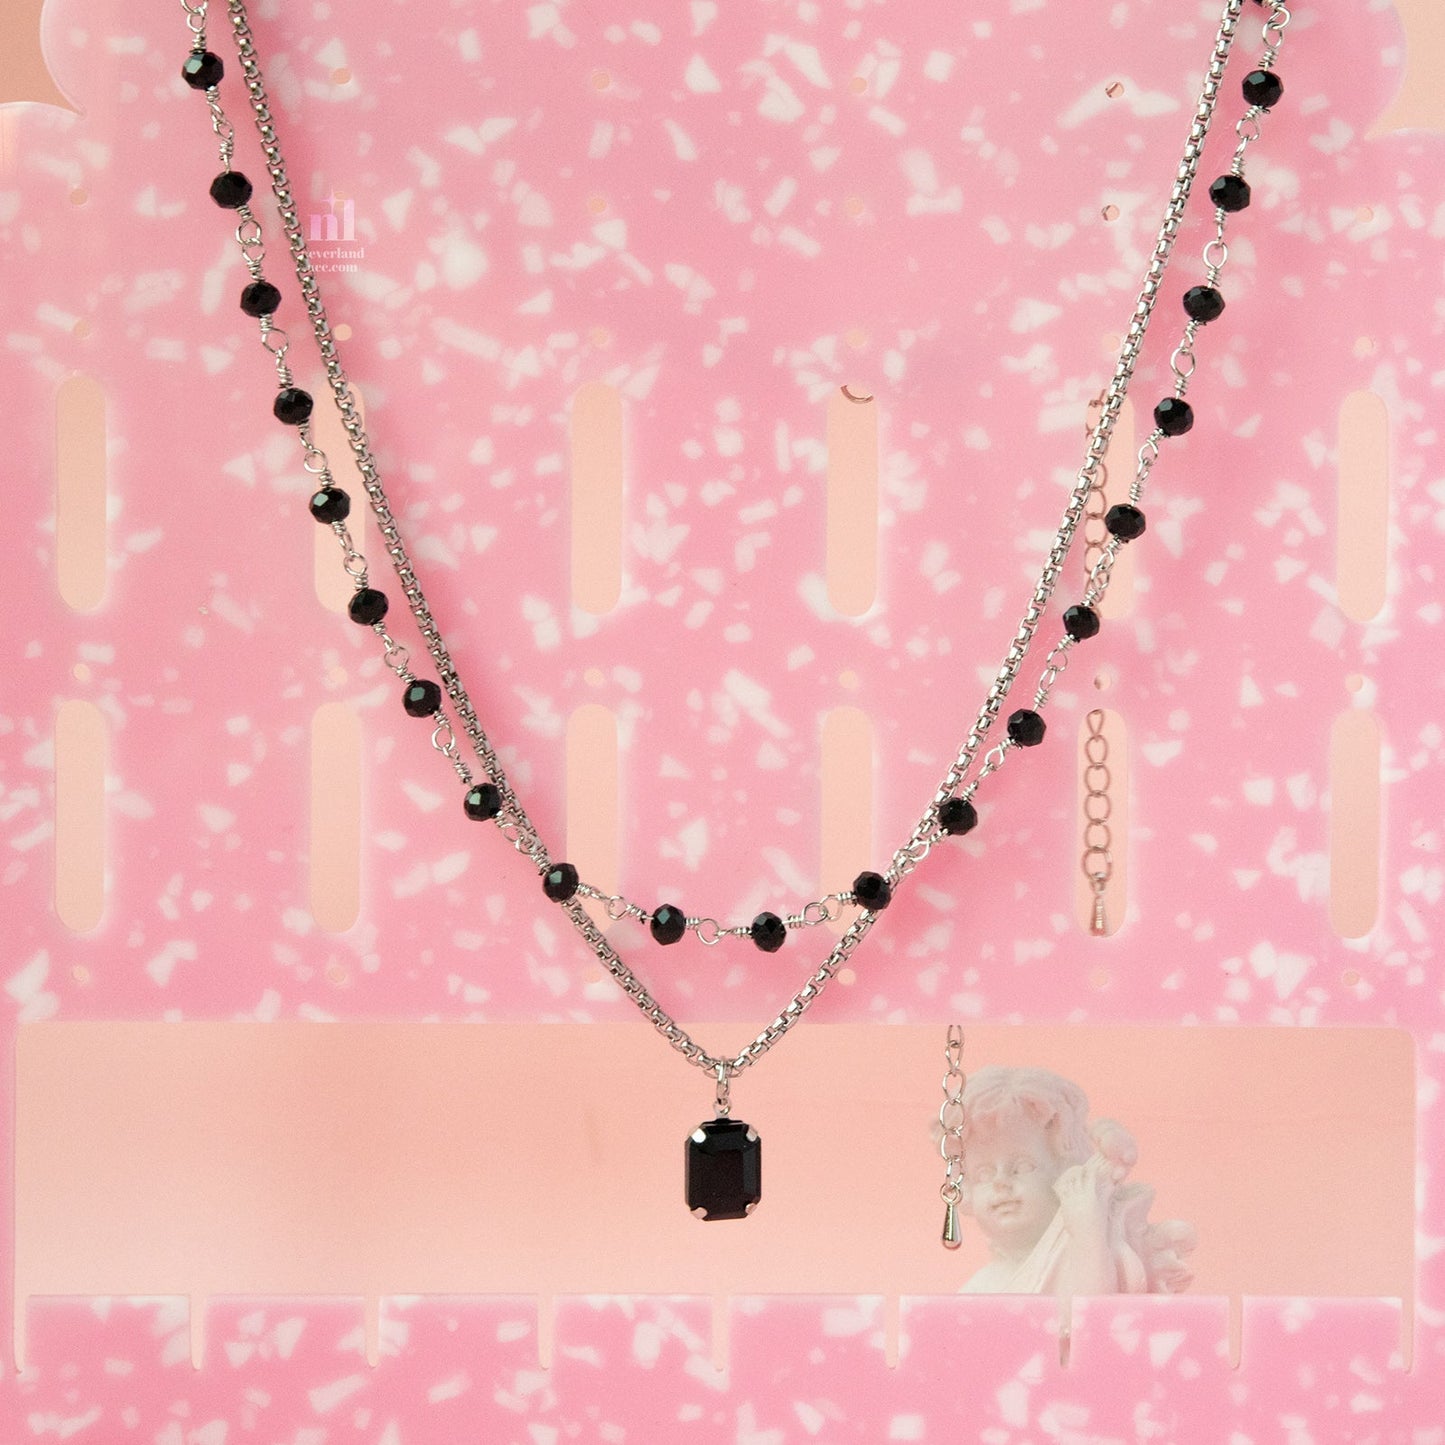 Black Charm Necklace Two-Piece Set - neverland accessories